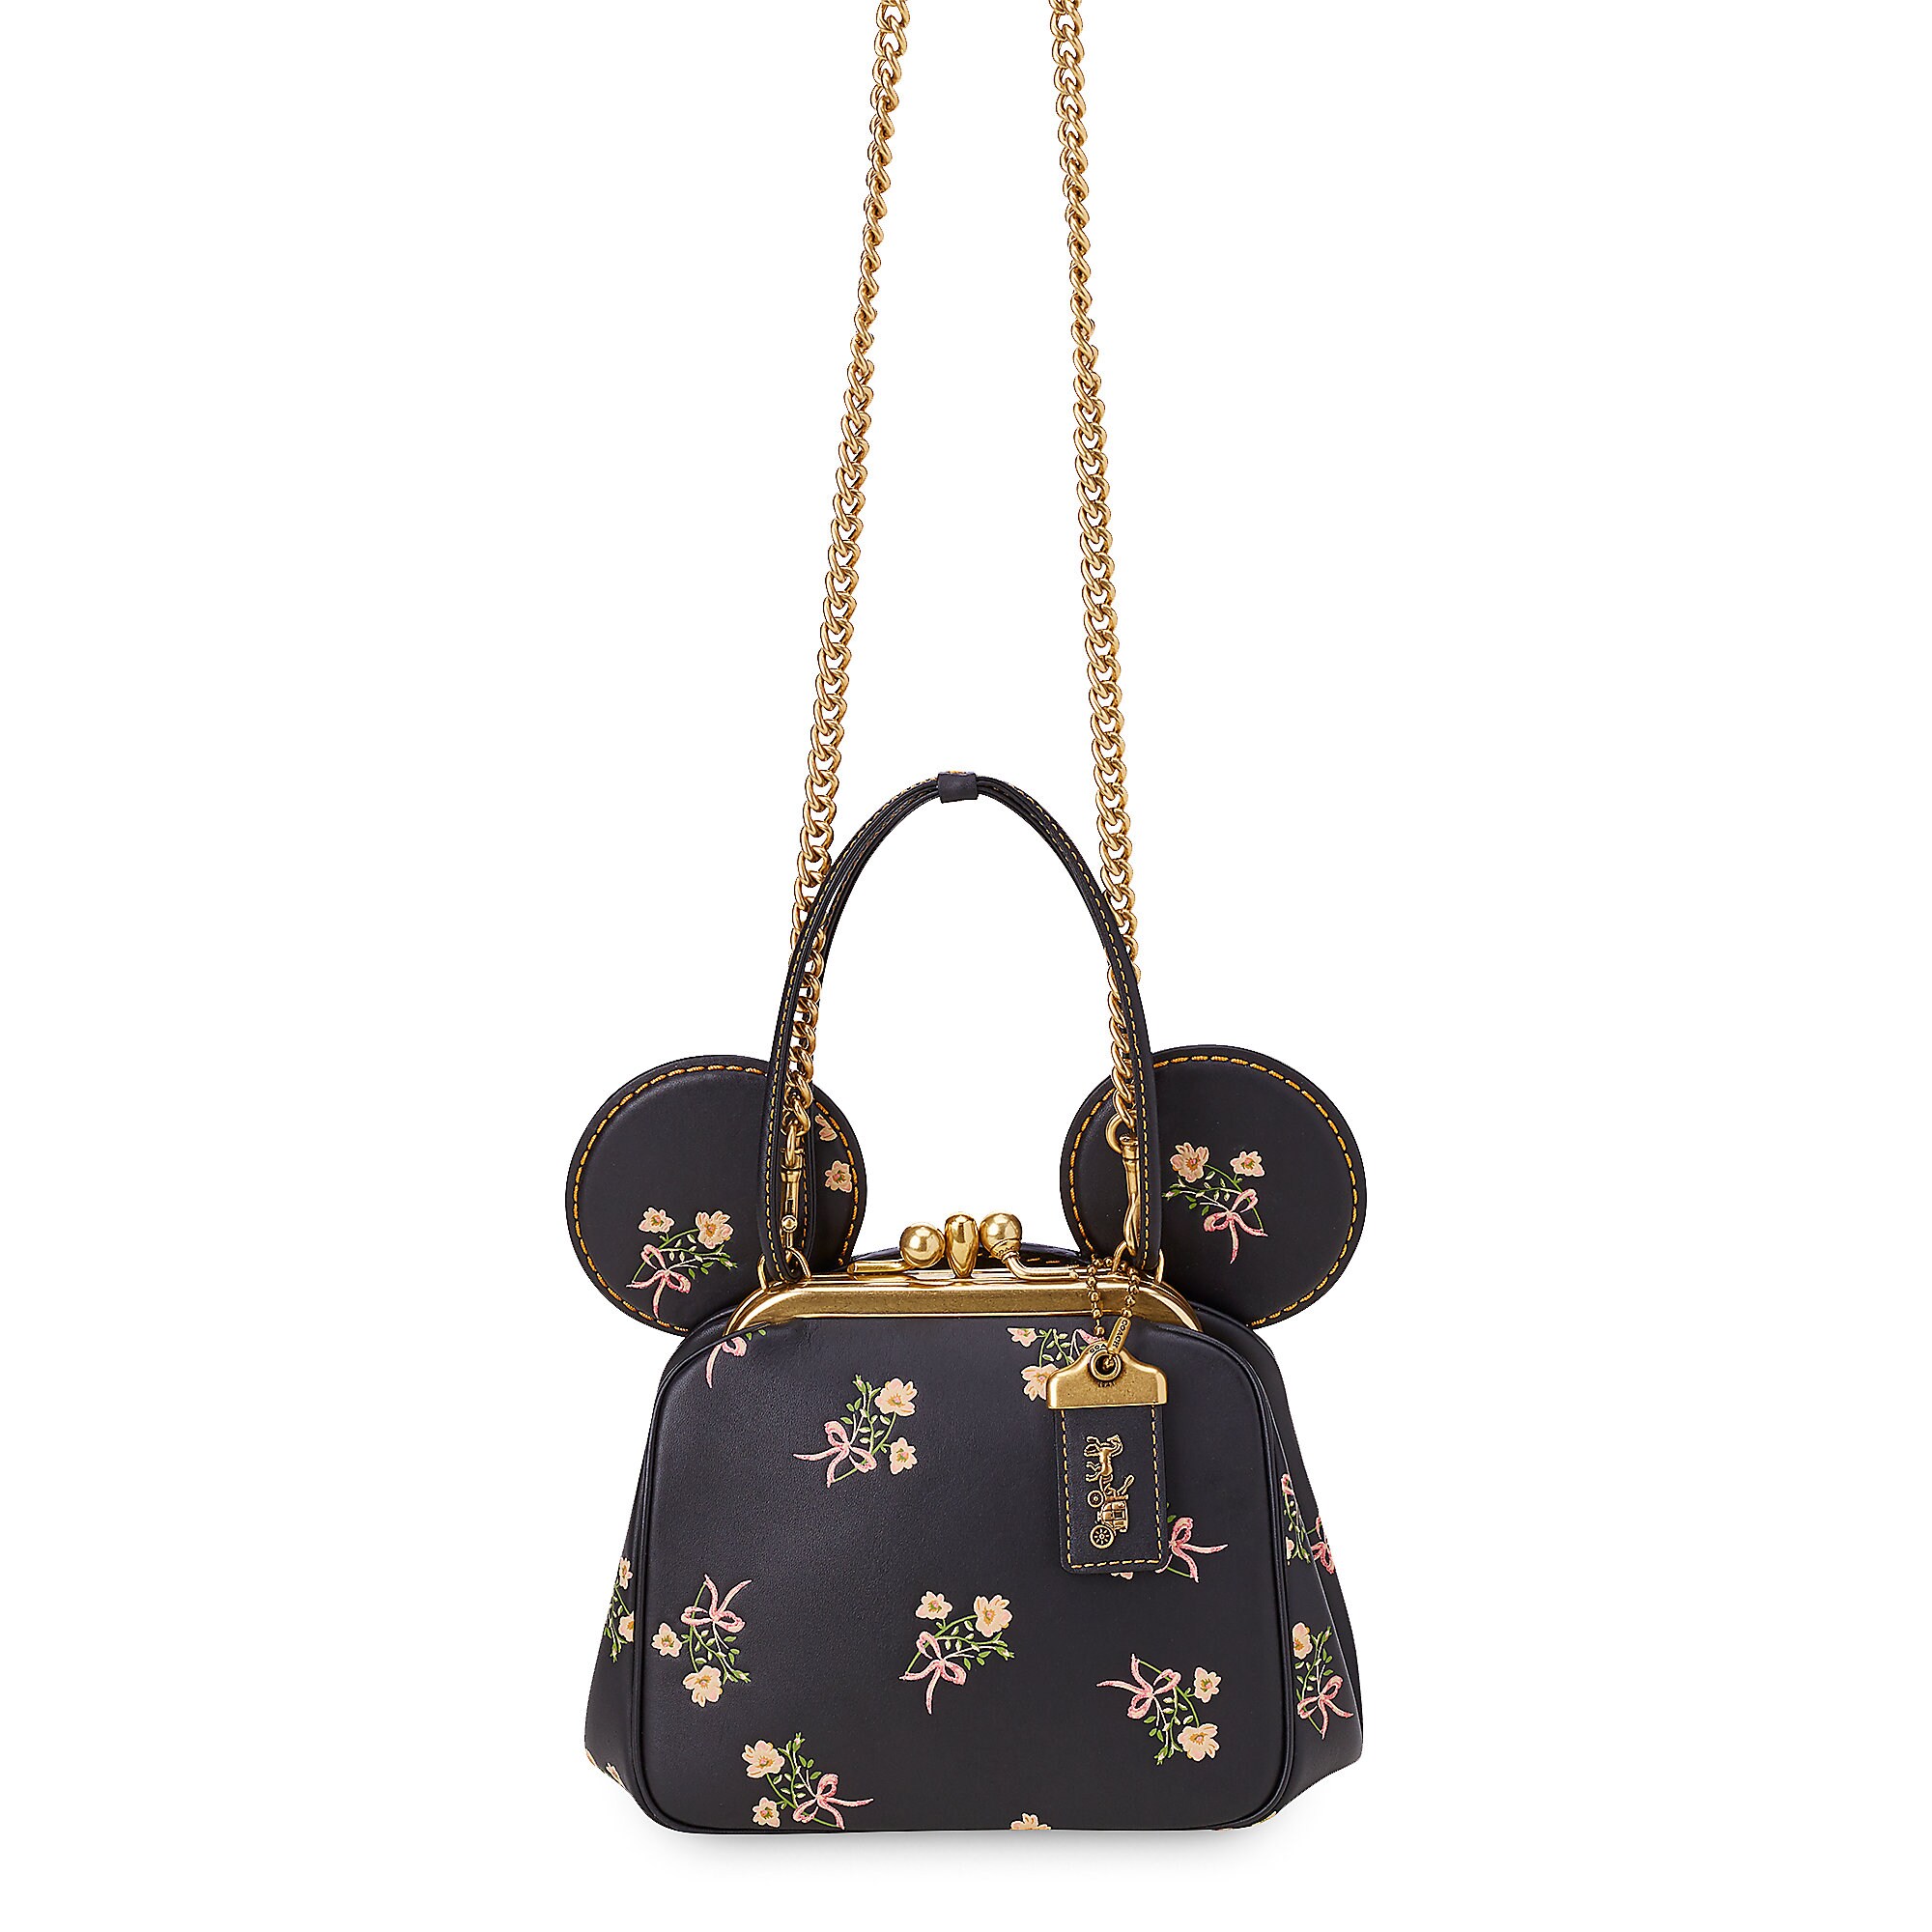 Minnie Mouse Floral Kisslock Leather Bag by COACH - Black